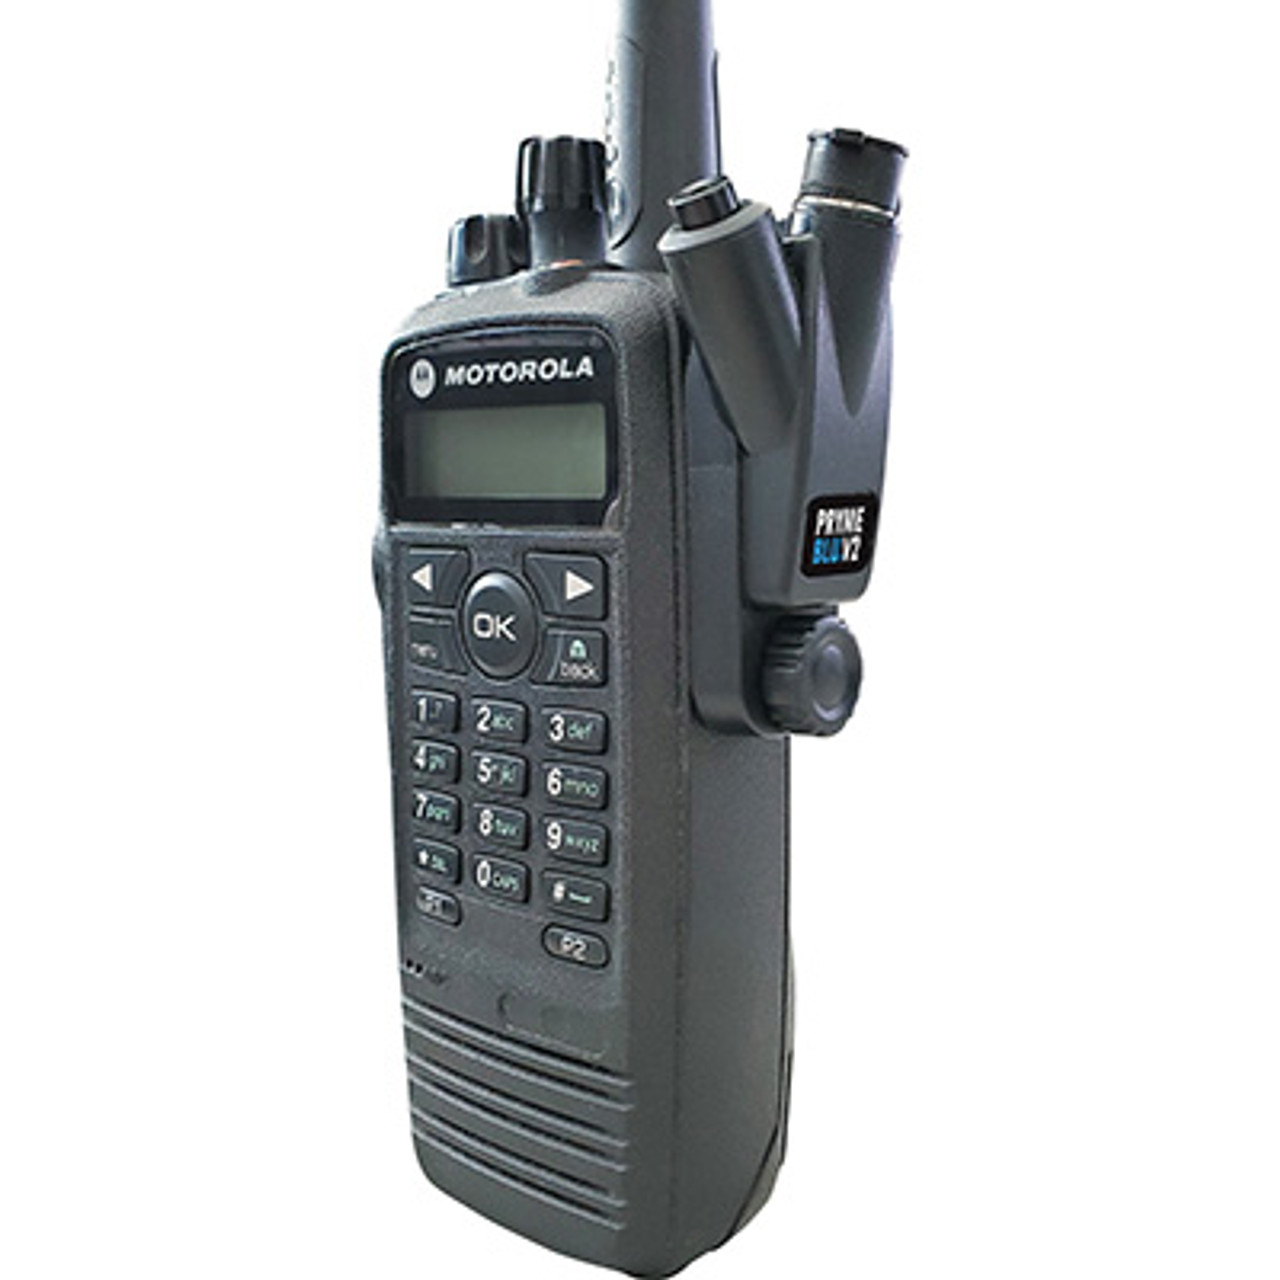 BTA-50 Motorola Bluetooth Dongle - EarPhone Connection